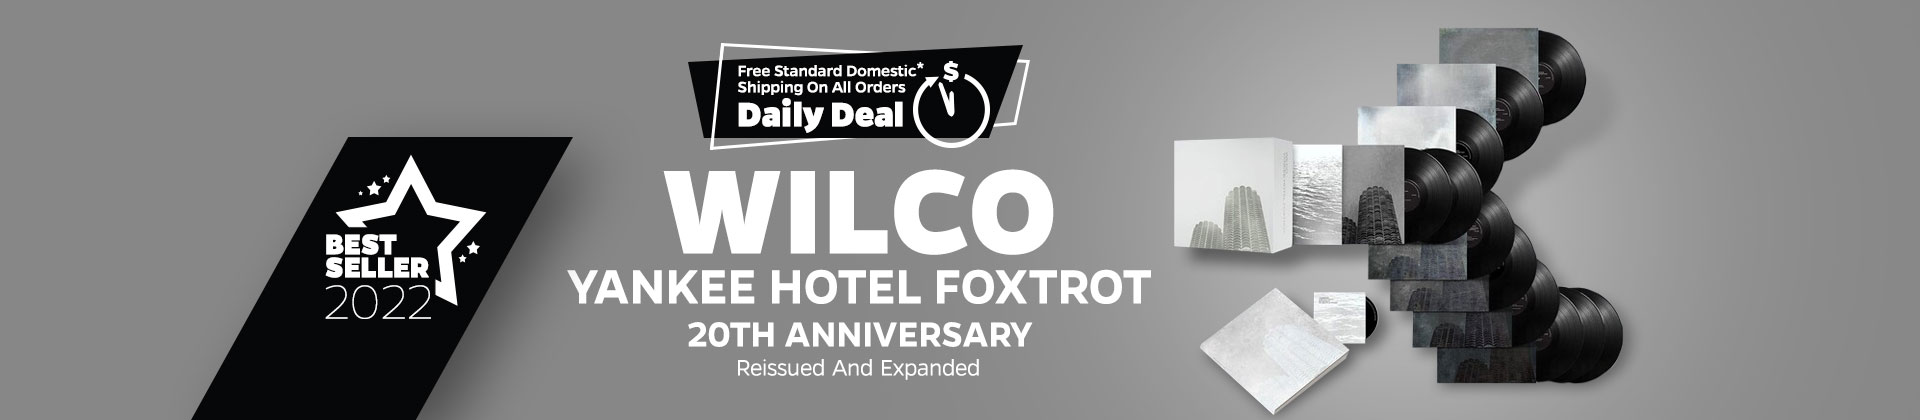 Wilco Yankee Hotel Foxtrot 